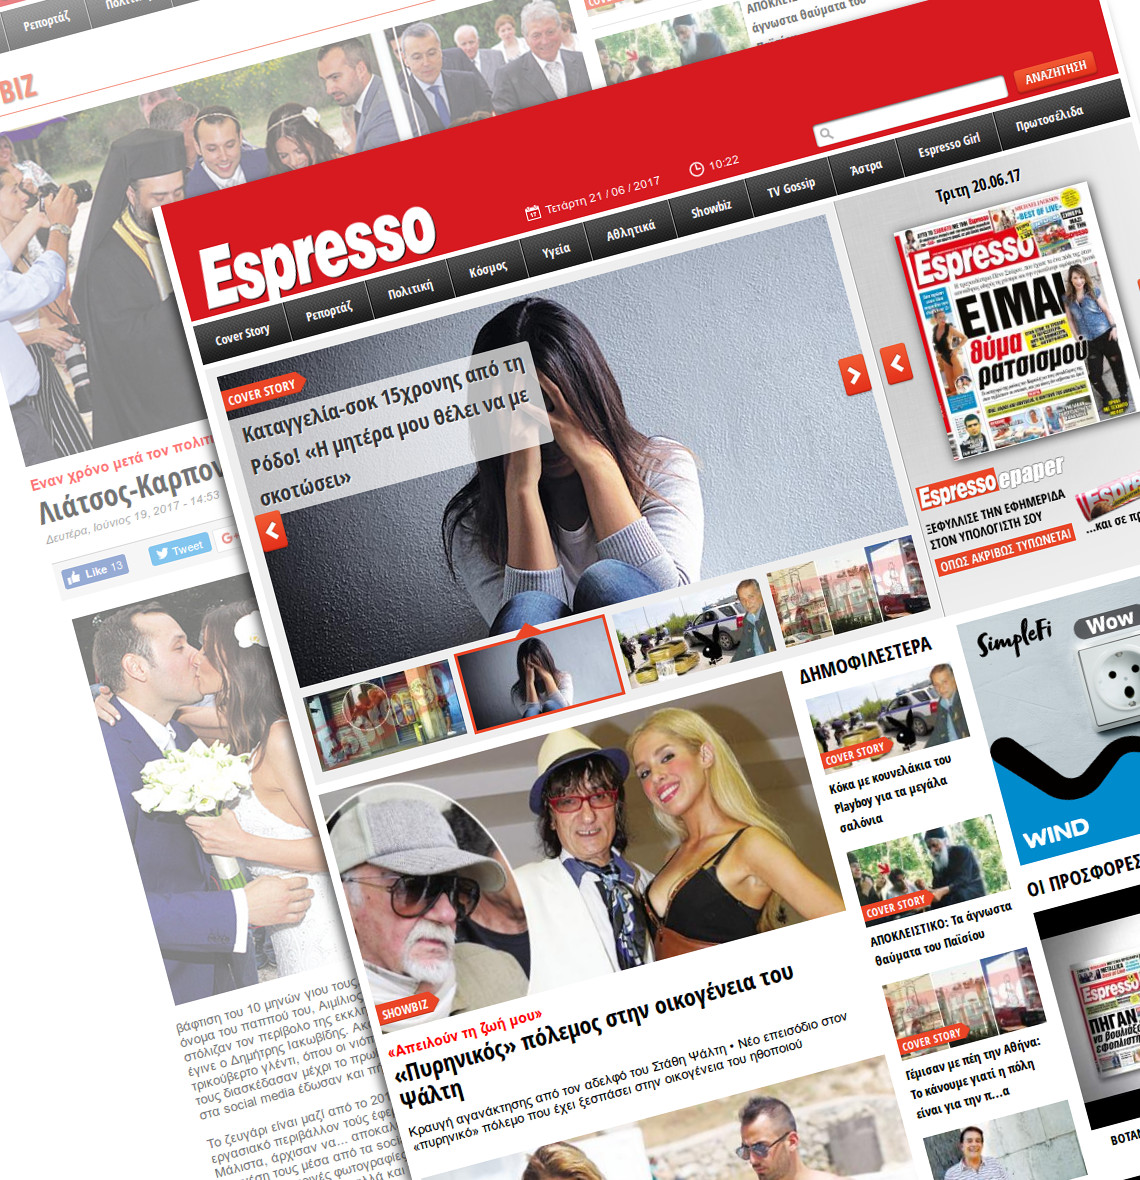 EspressoNews - Responsive Design & Development